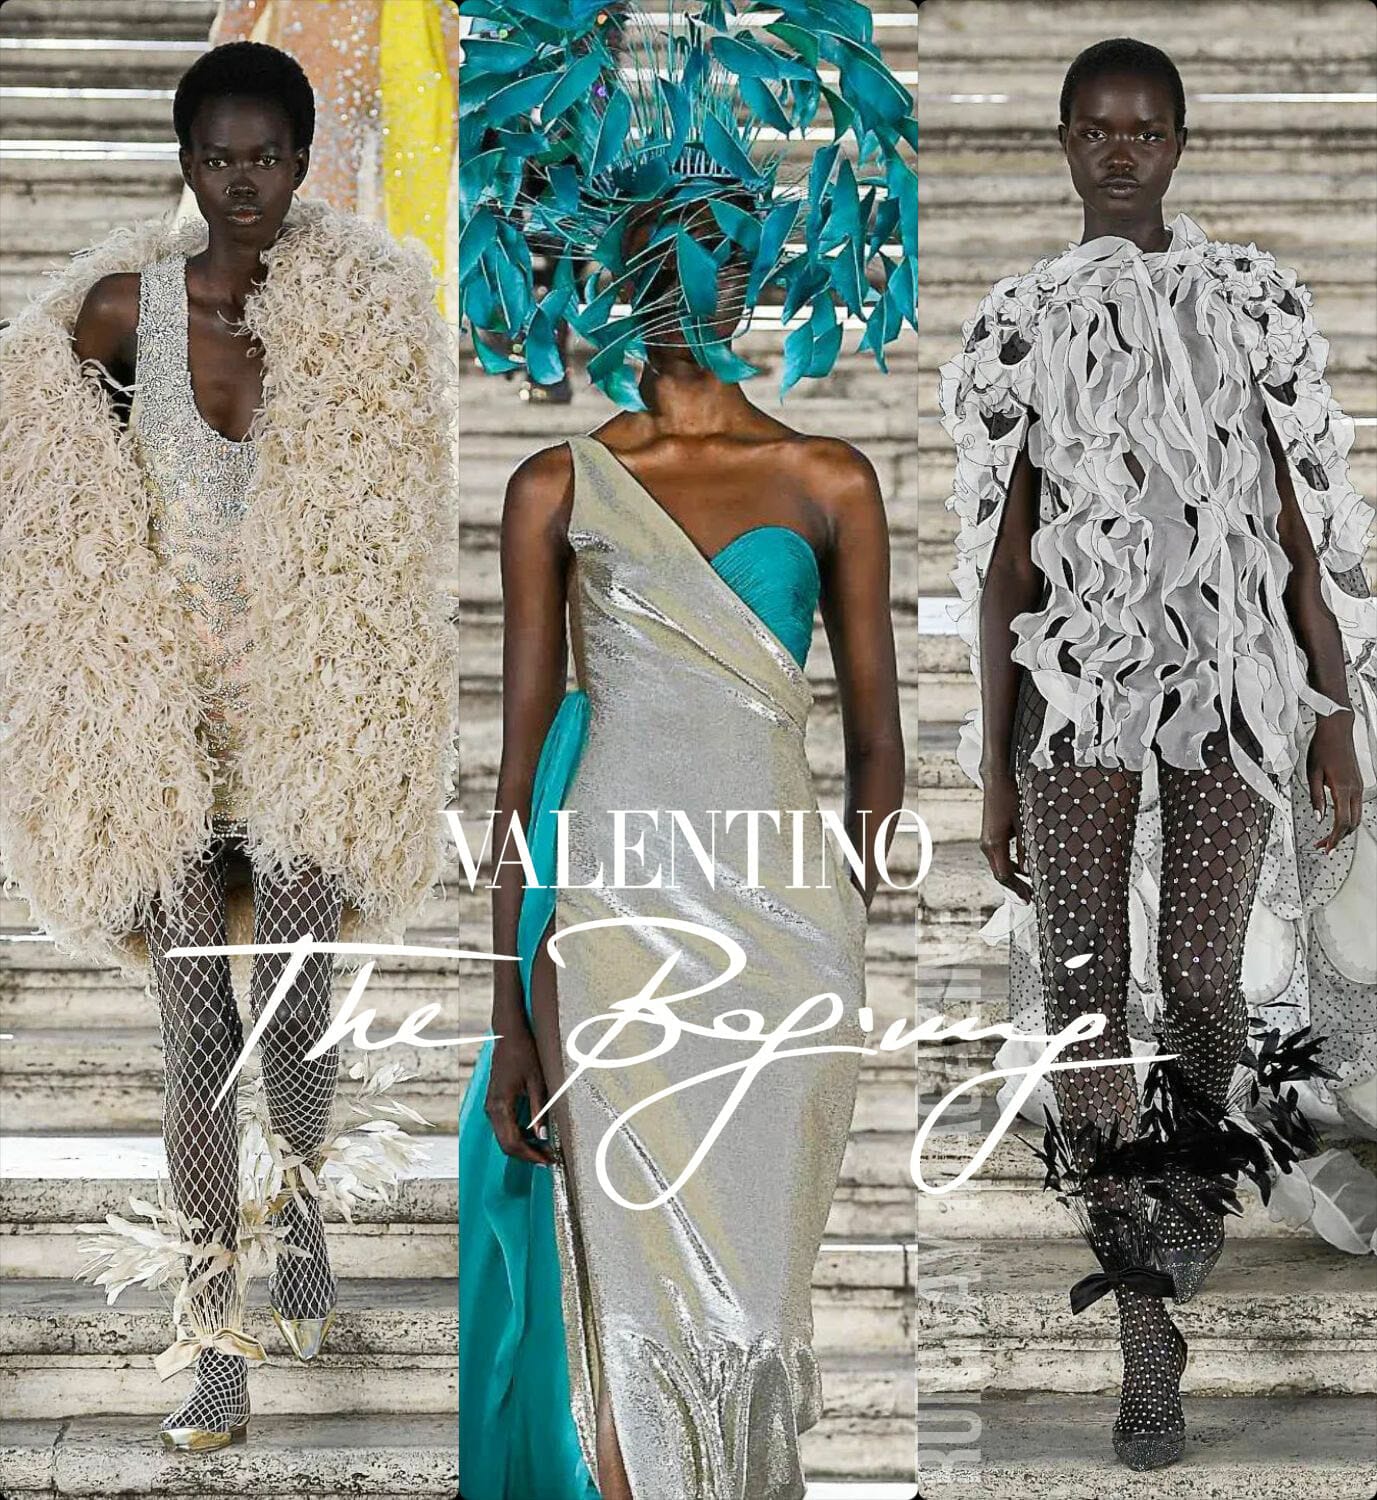 Valentino The Beginning Haute Couture Fall Winter 2022-2023. RUNWAY MAGAZINE ® Collections. RUNWAY NOW / RUNWAY NEW